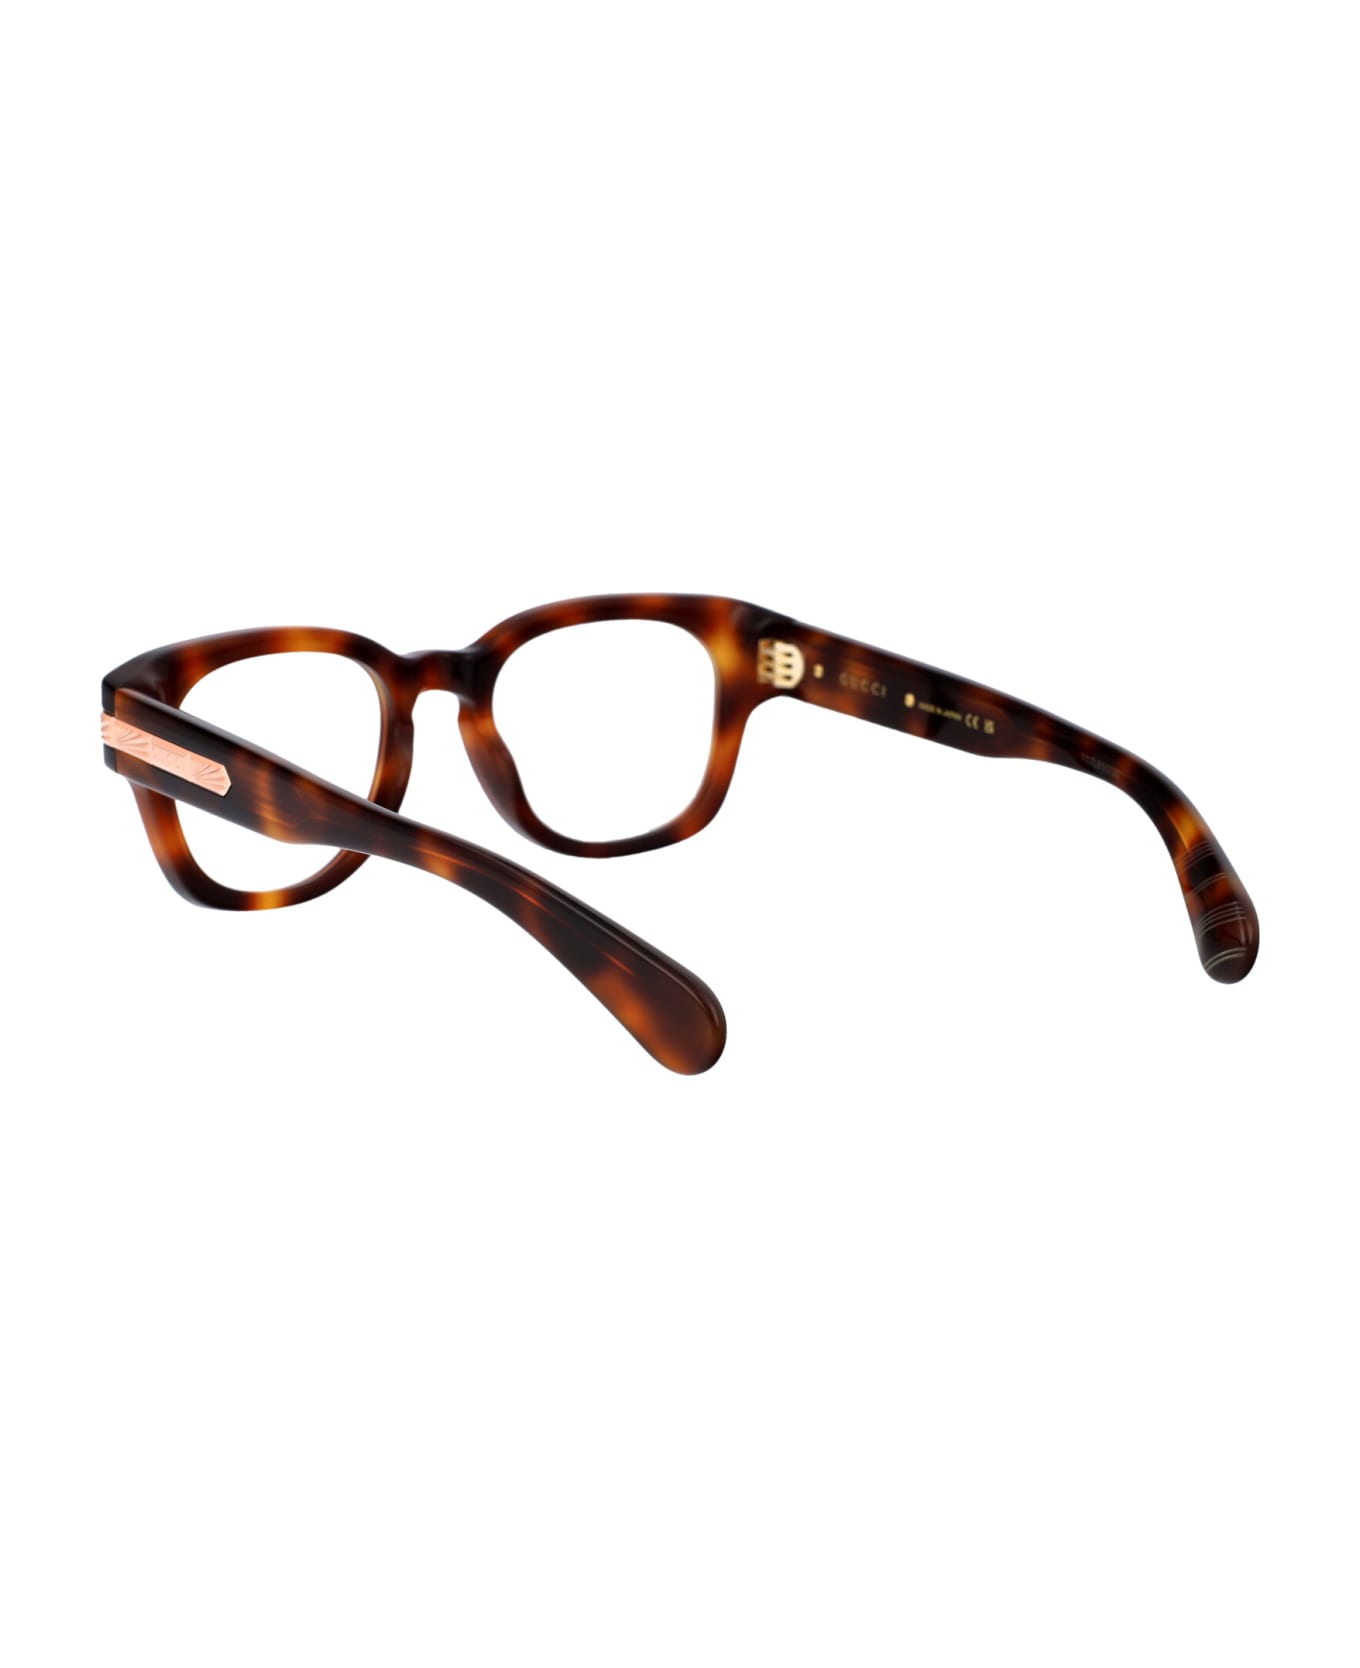 Gucci Eyewear Gg1518o Glasses - 002 HAVANA HAVANA TRANSPARENT アイウェア